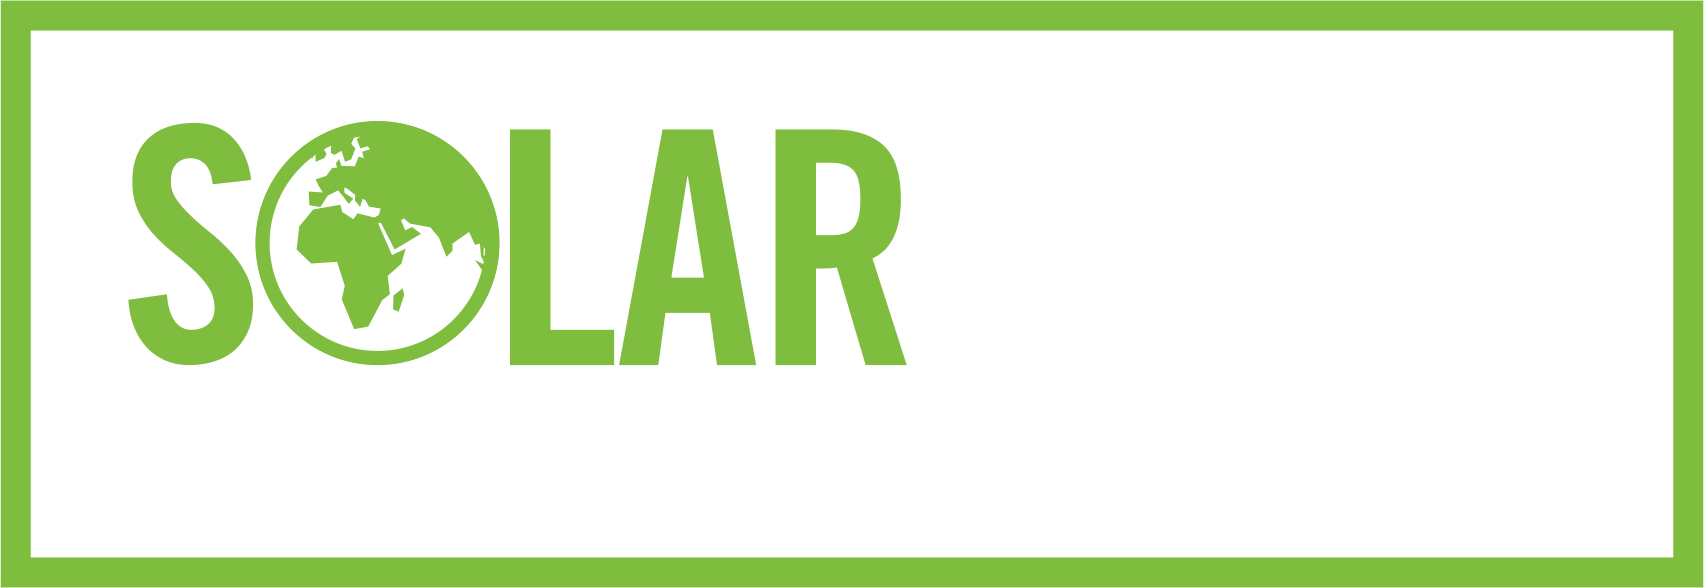 Solar Brite Logo